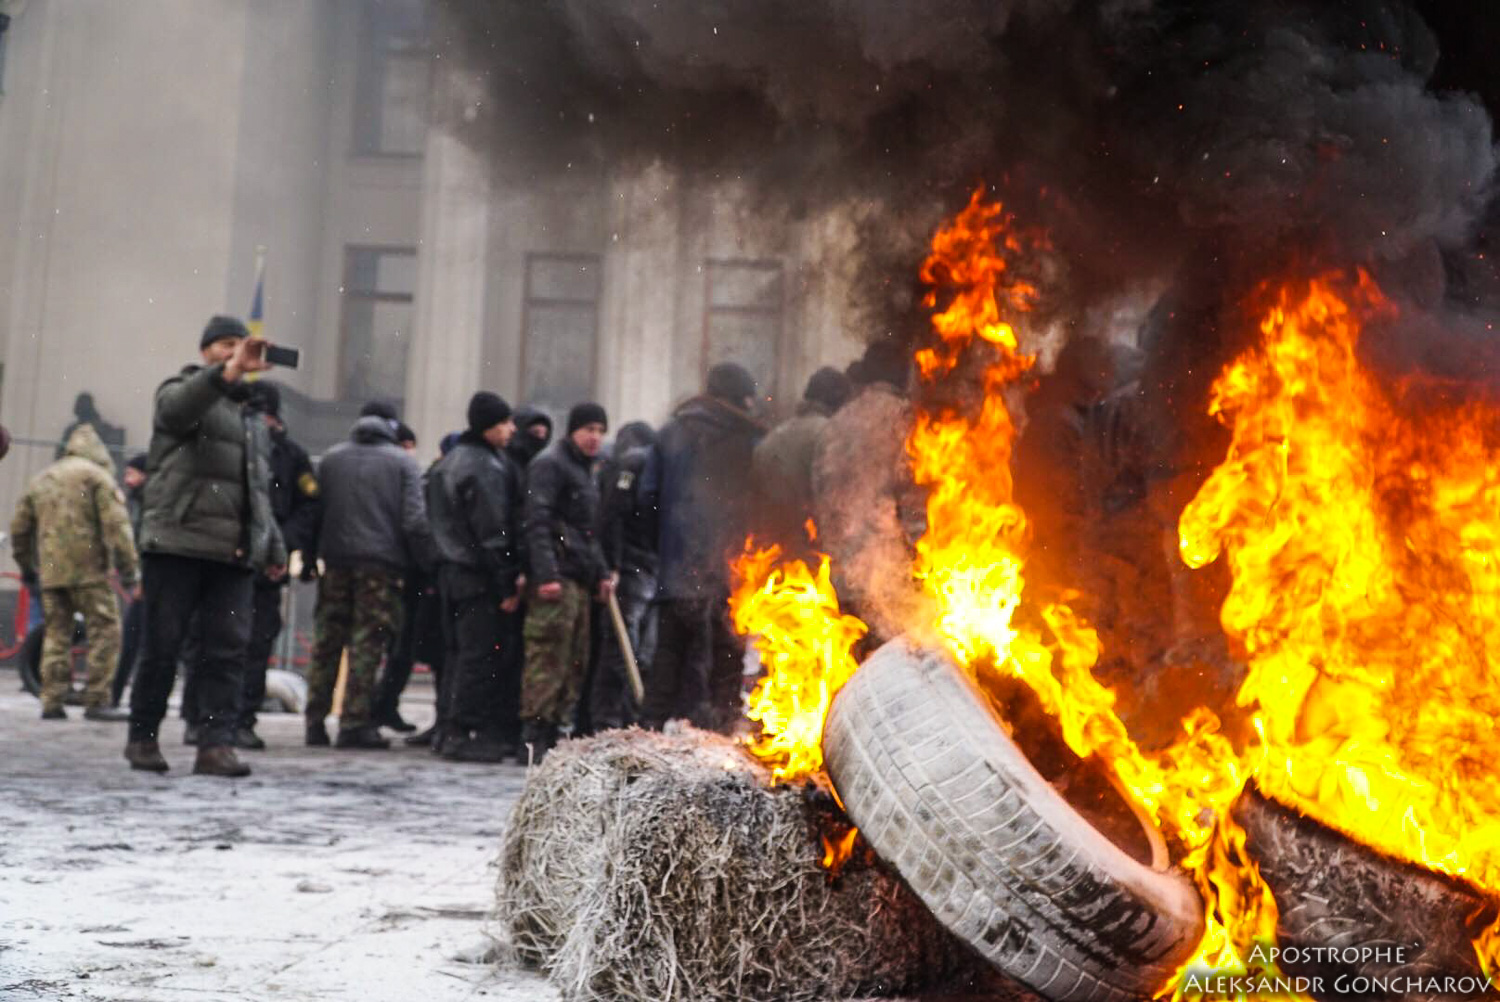 sanctions - Ukraine News in brief. Tuesday 16 January. [Ukrainian sources] Fb446553efff9a28564a0e3676e0edf9